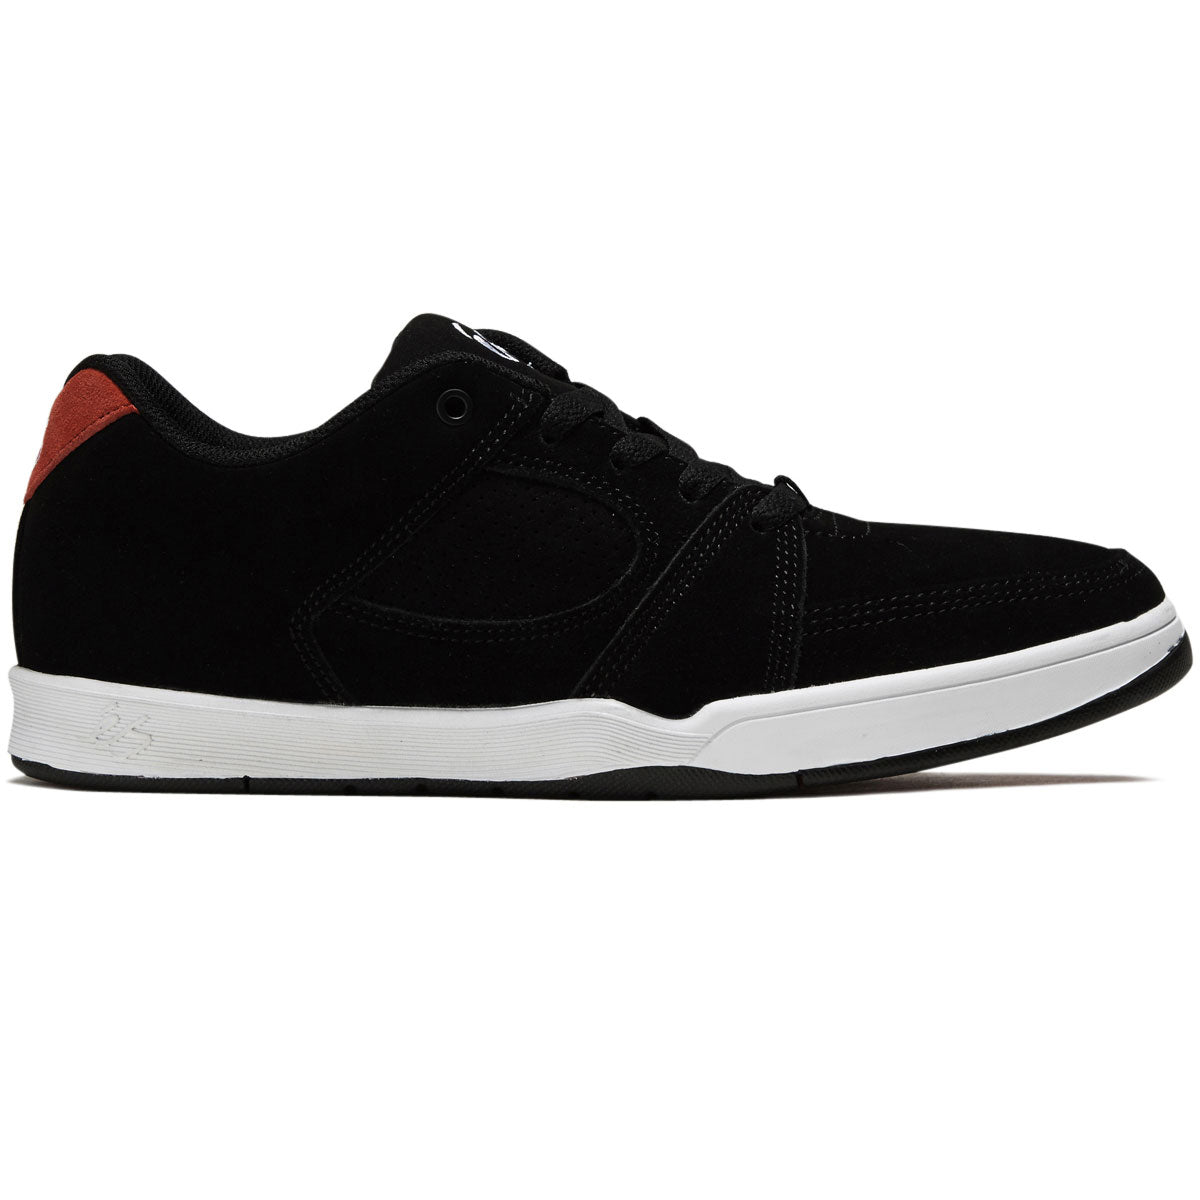 eS Accel Slim x Swift 1.5 Shoes - Black/White/Red image 1